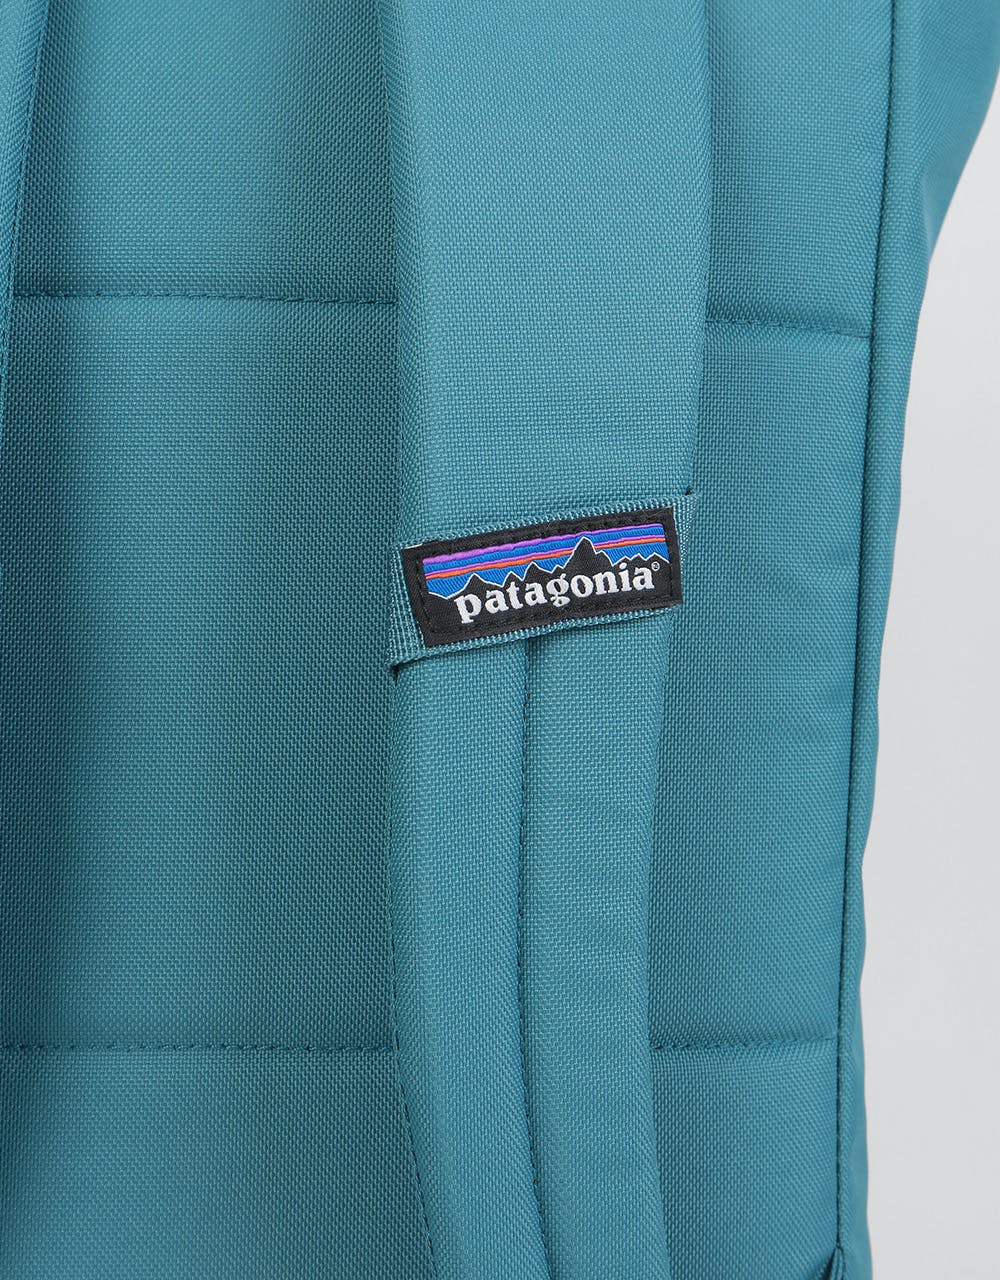 Patagonia Arbor Market Pack 15L Backpack - Tasmanian Teal